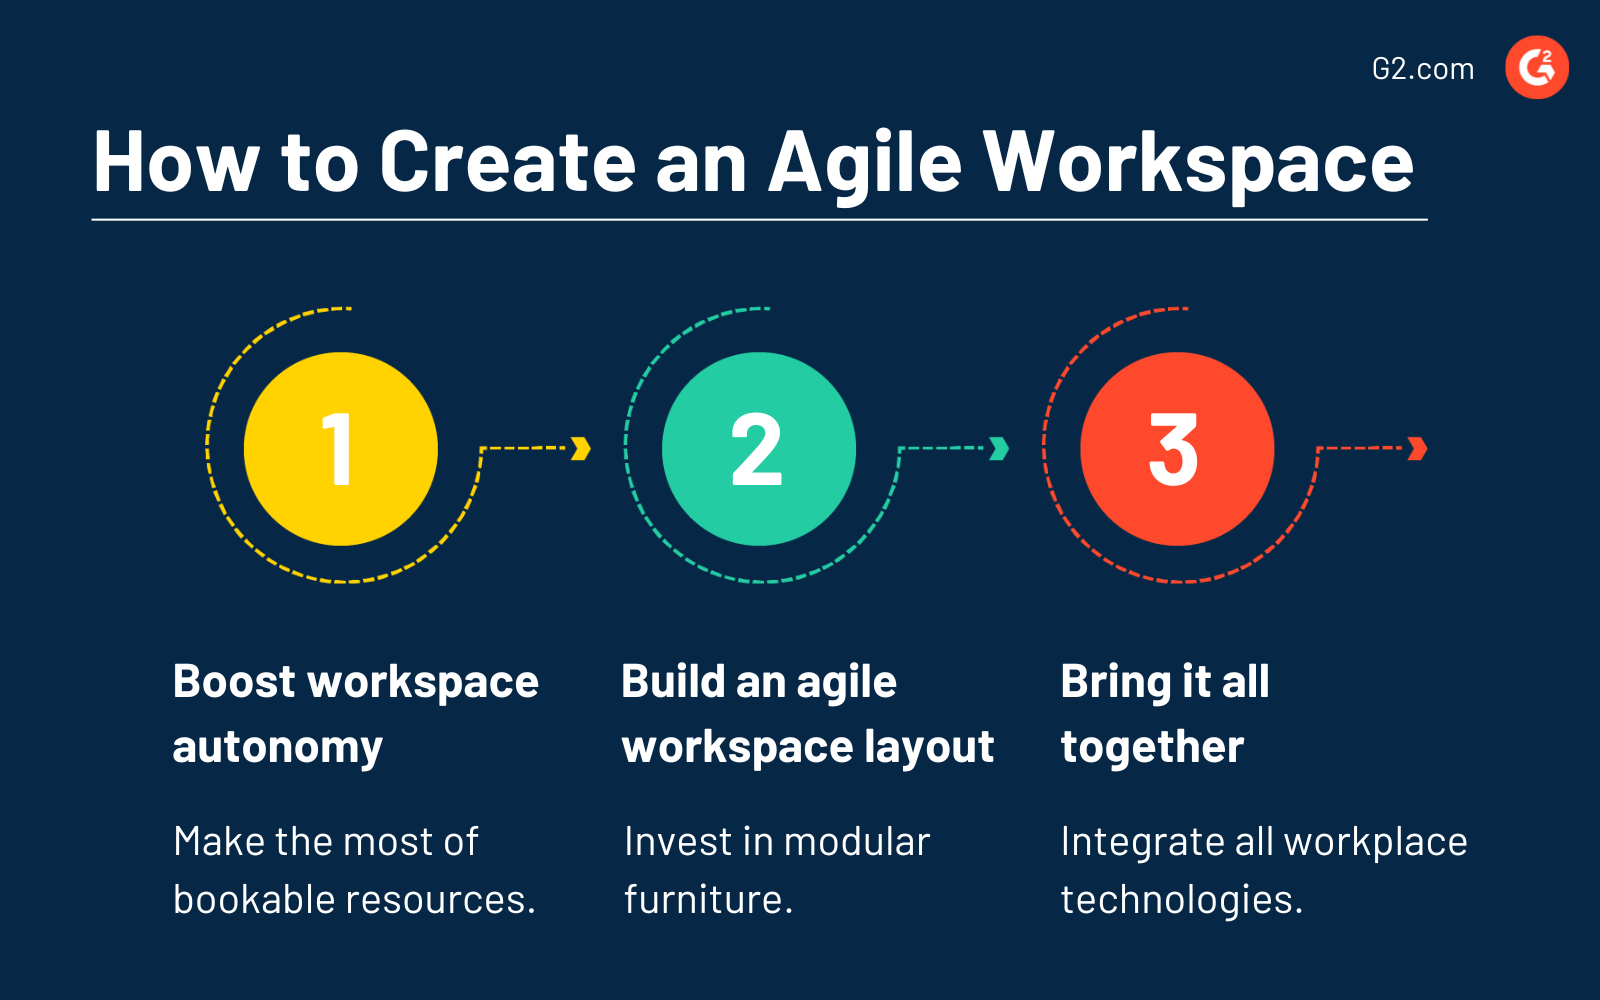 How to create an Agile Workspace